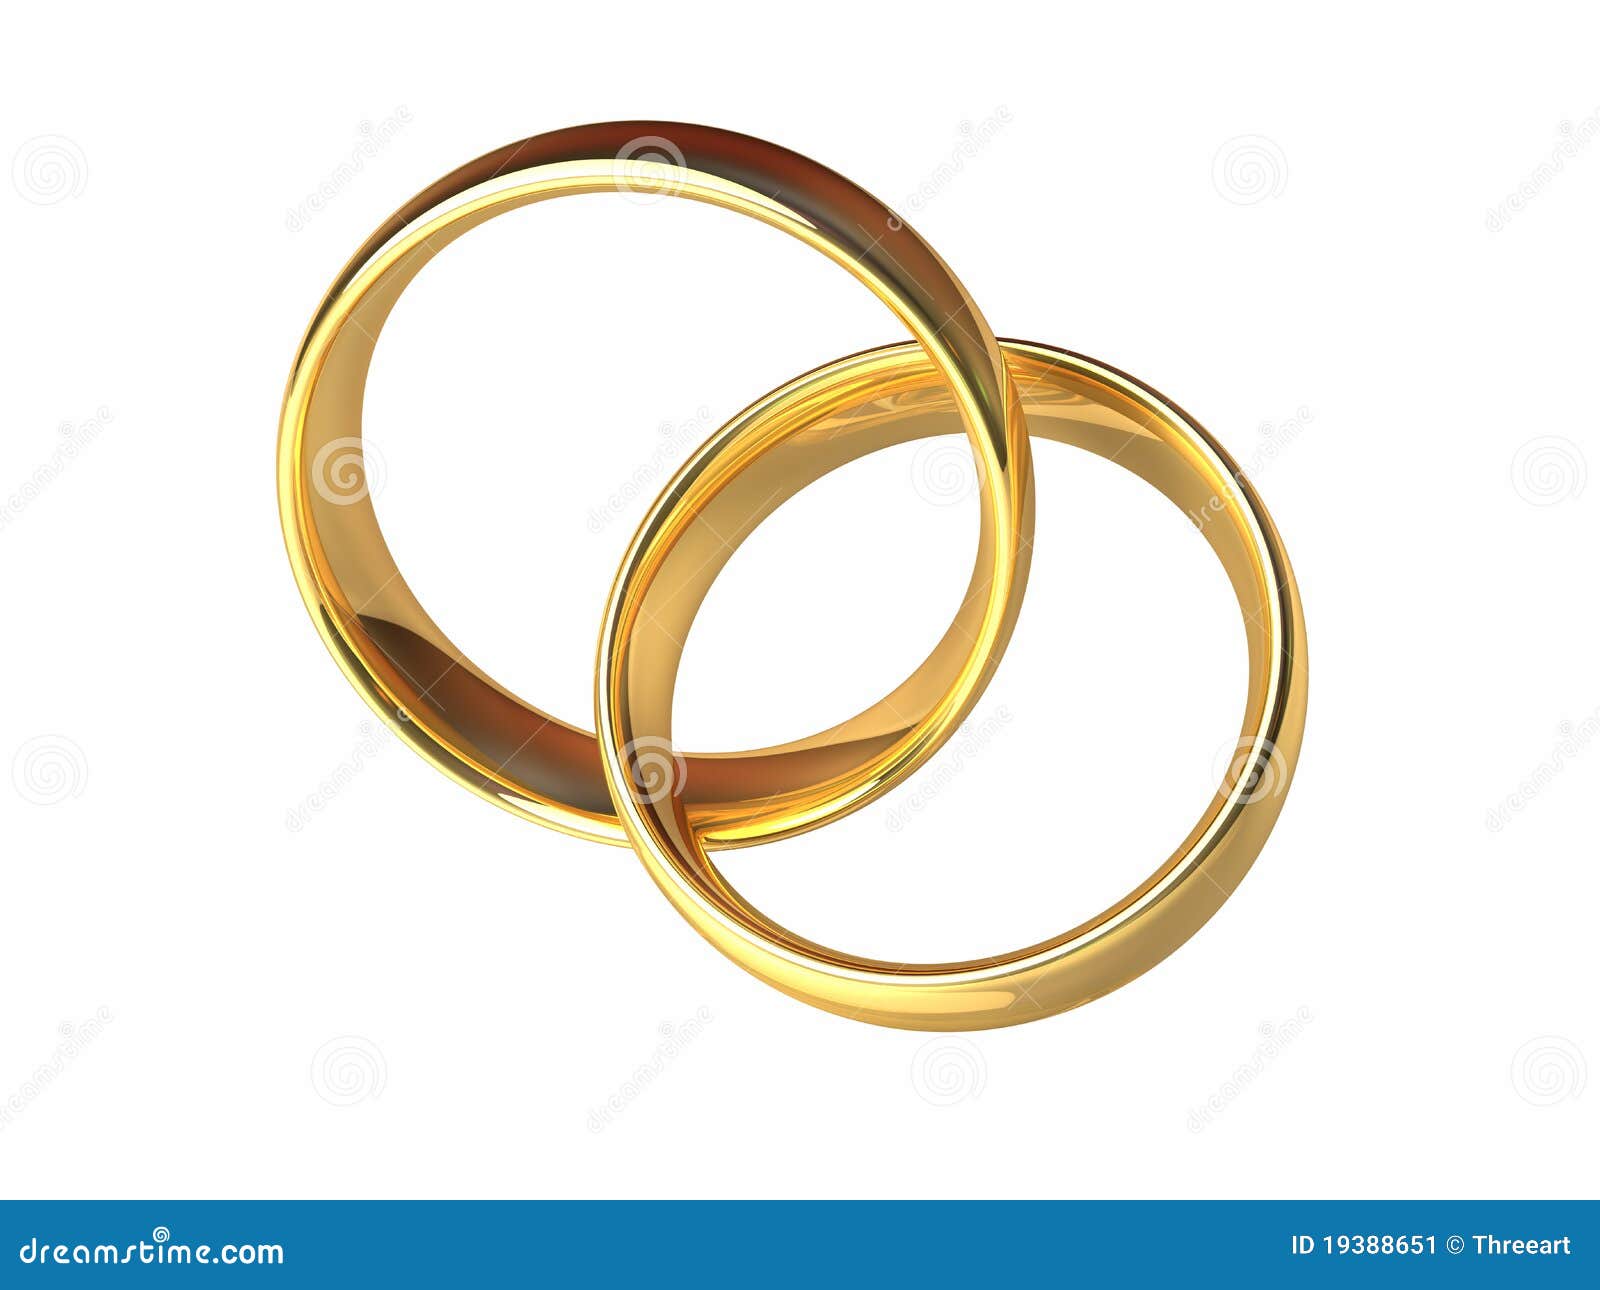 Gold Wedding  Rings  Together  Stock Illustration Image 